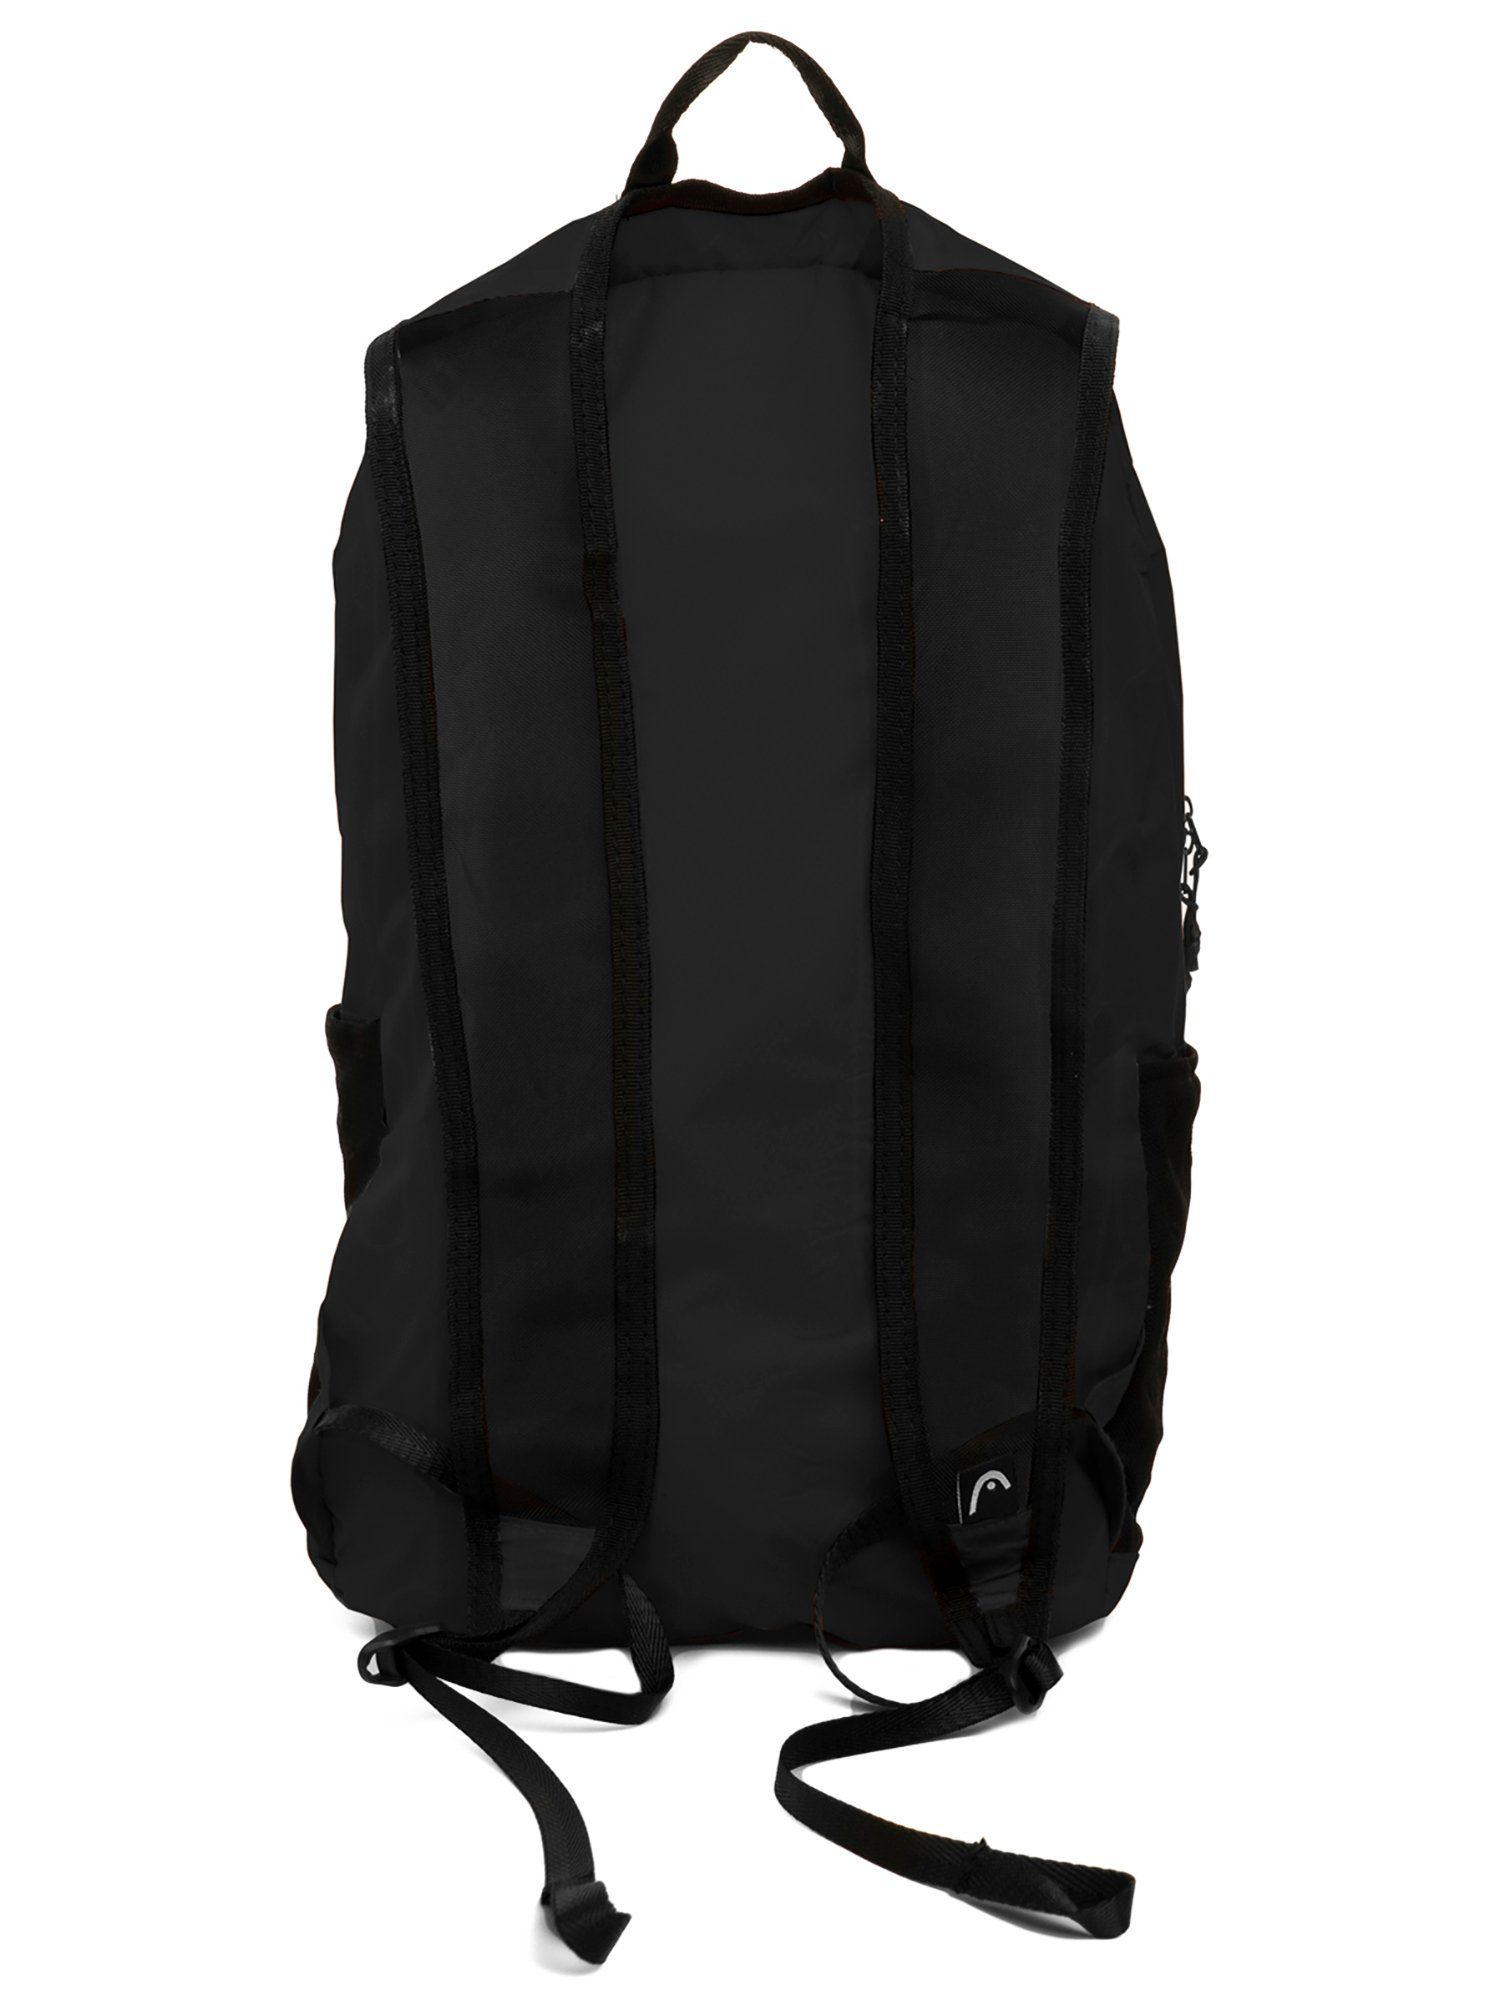 Rucksack Head Schwarz Foldable Backpack